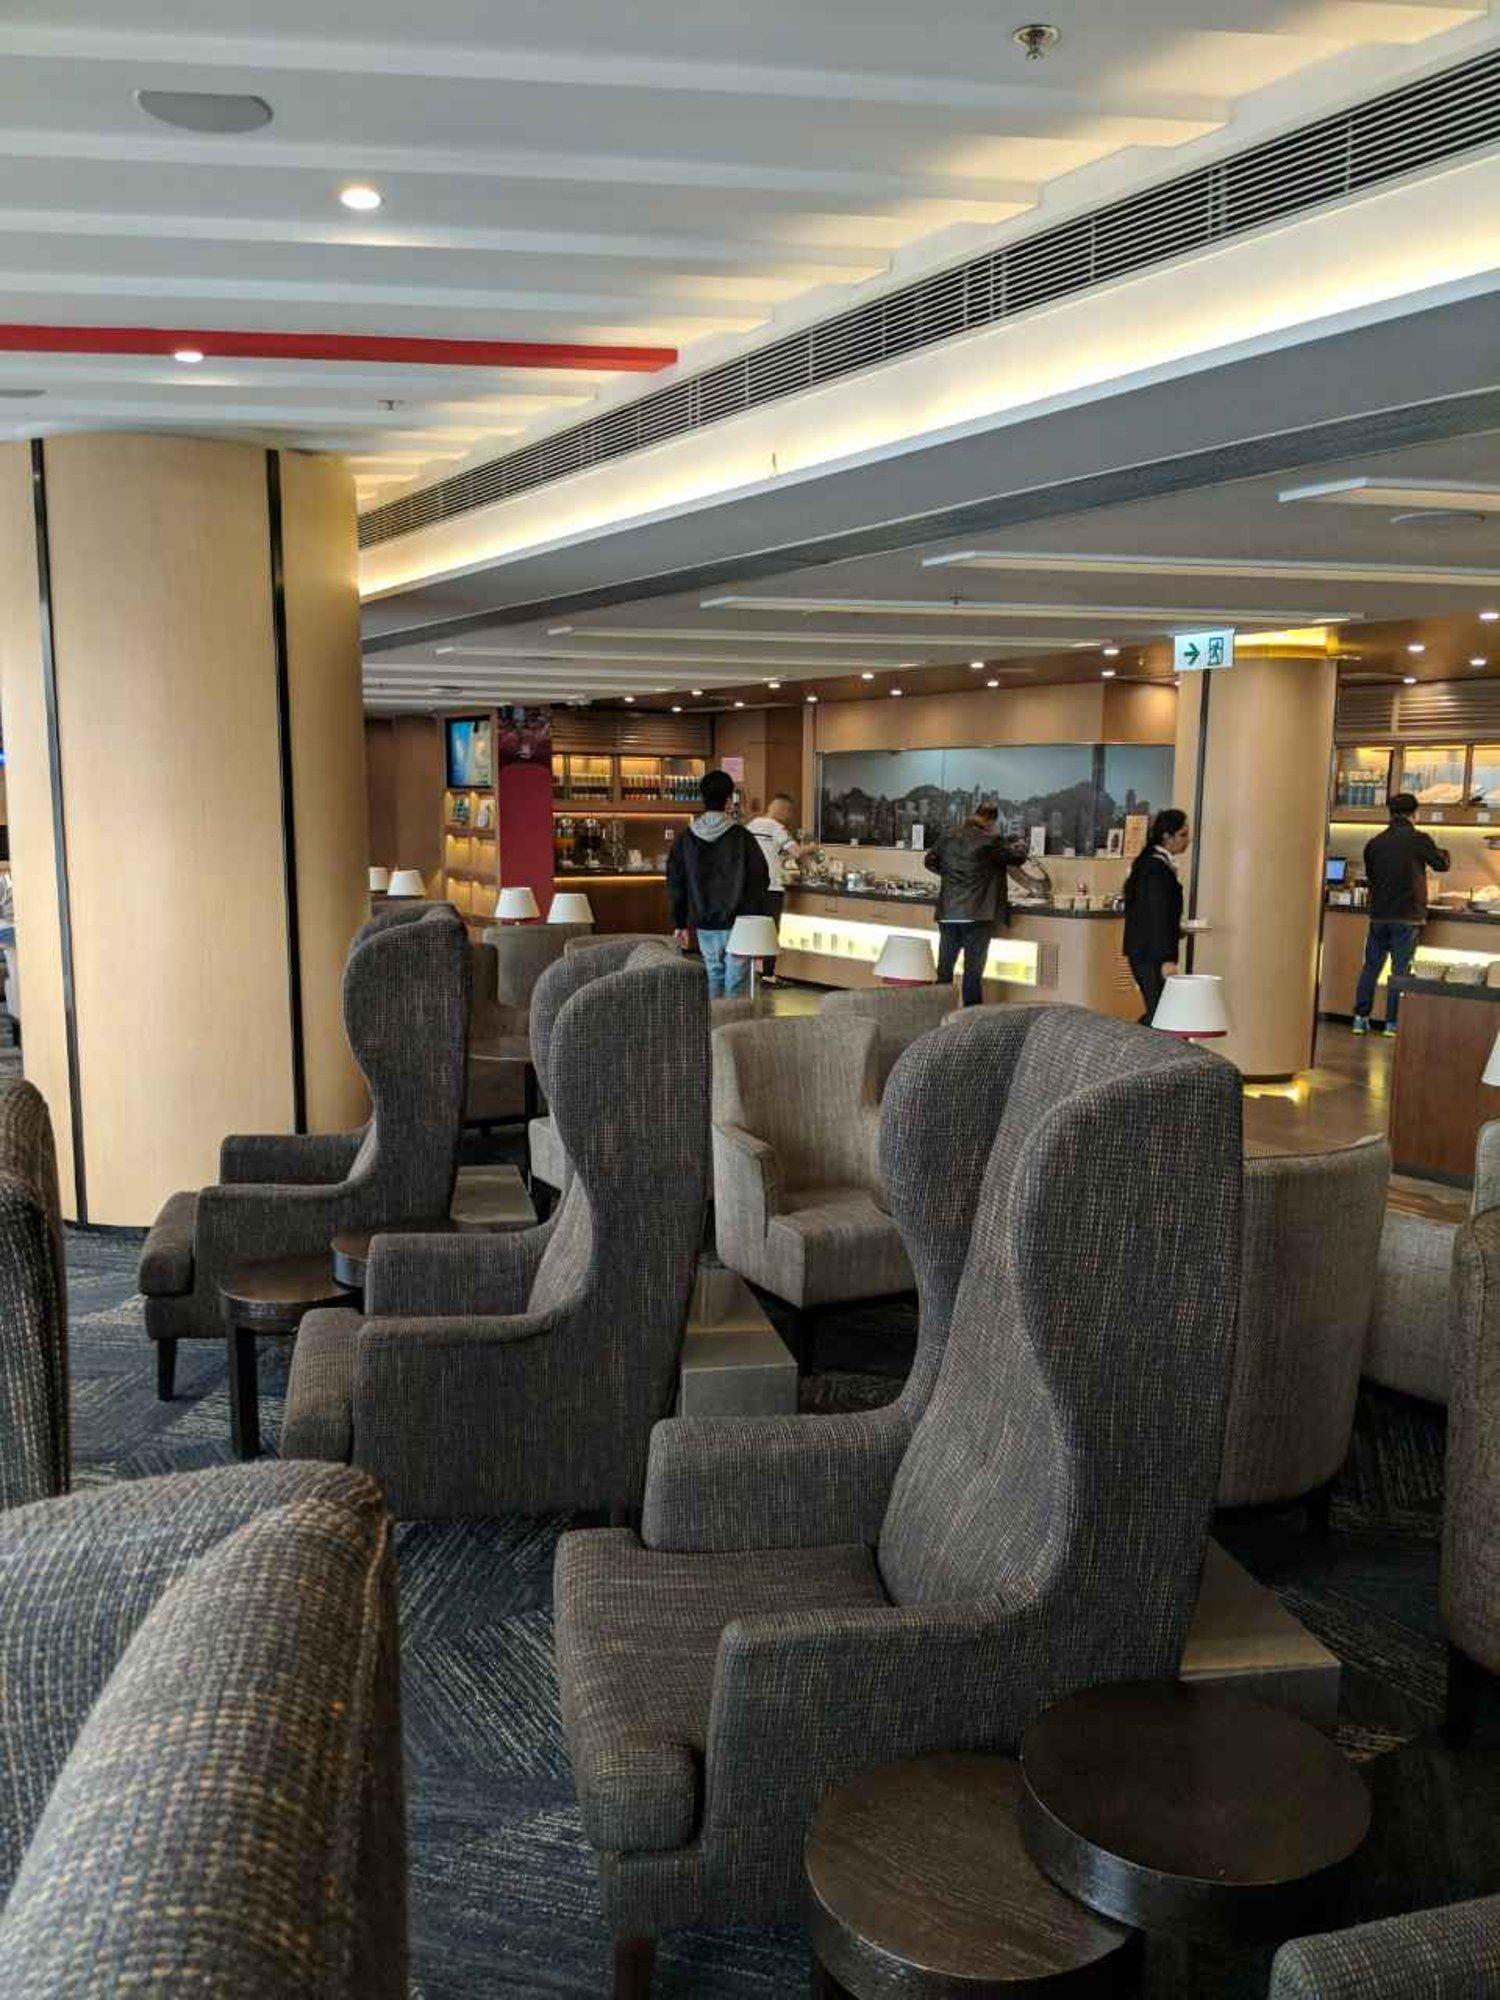 Hong Kong Airlines VIP Lounge (Club Bauhinia) image 34 of 40